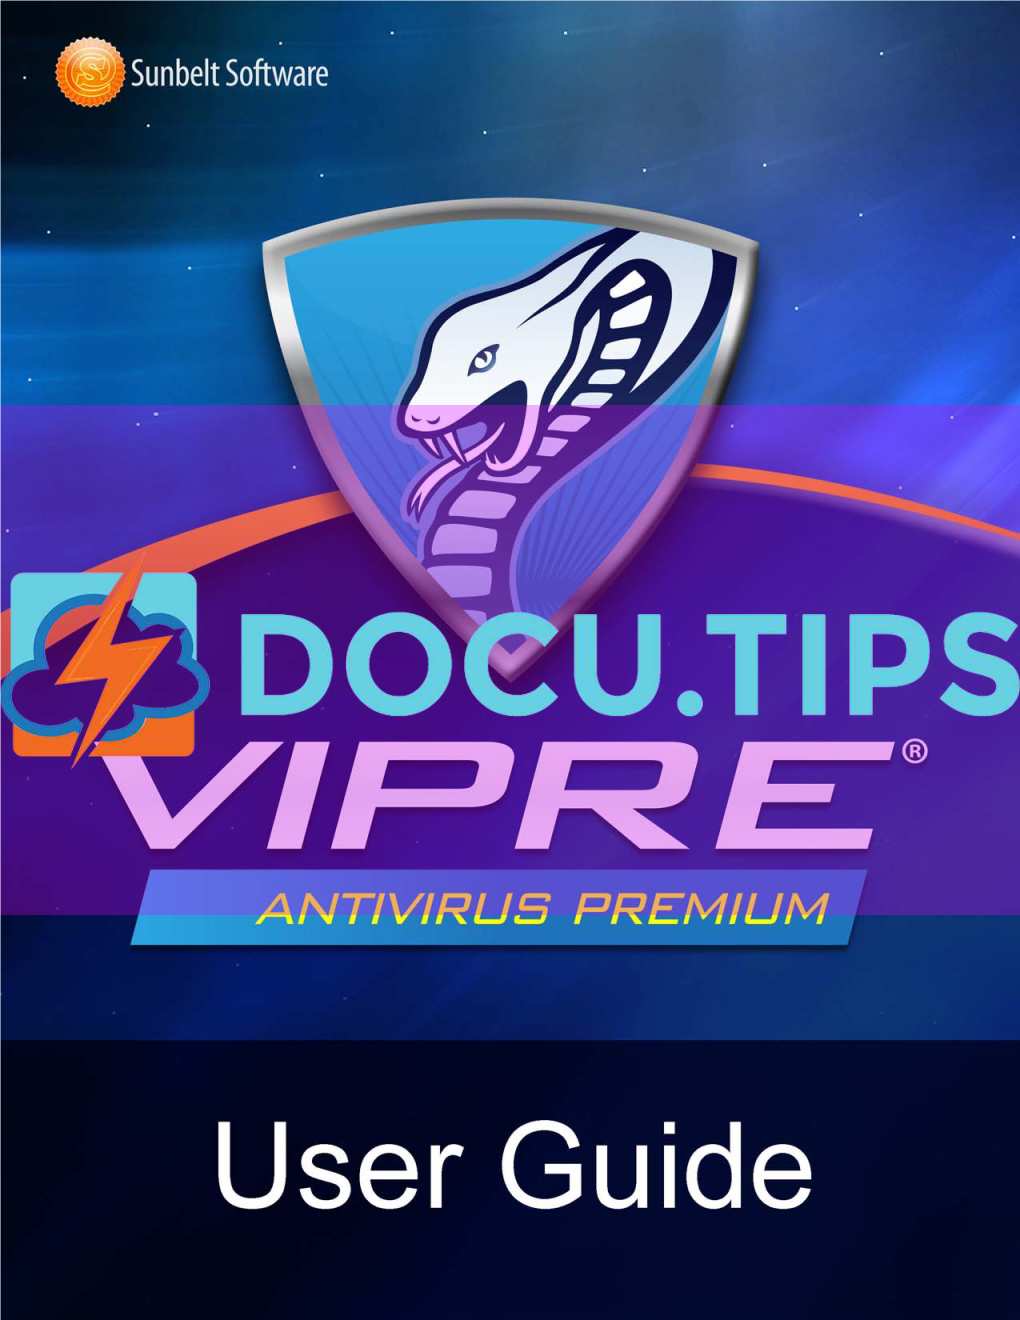 Vipre Antivirus Premium User Guide